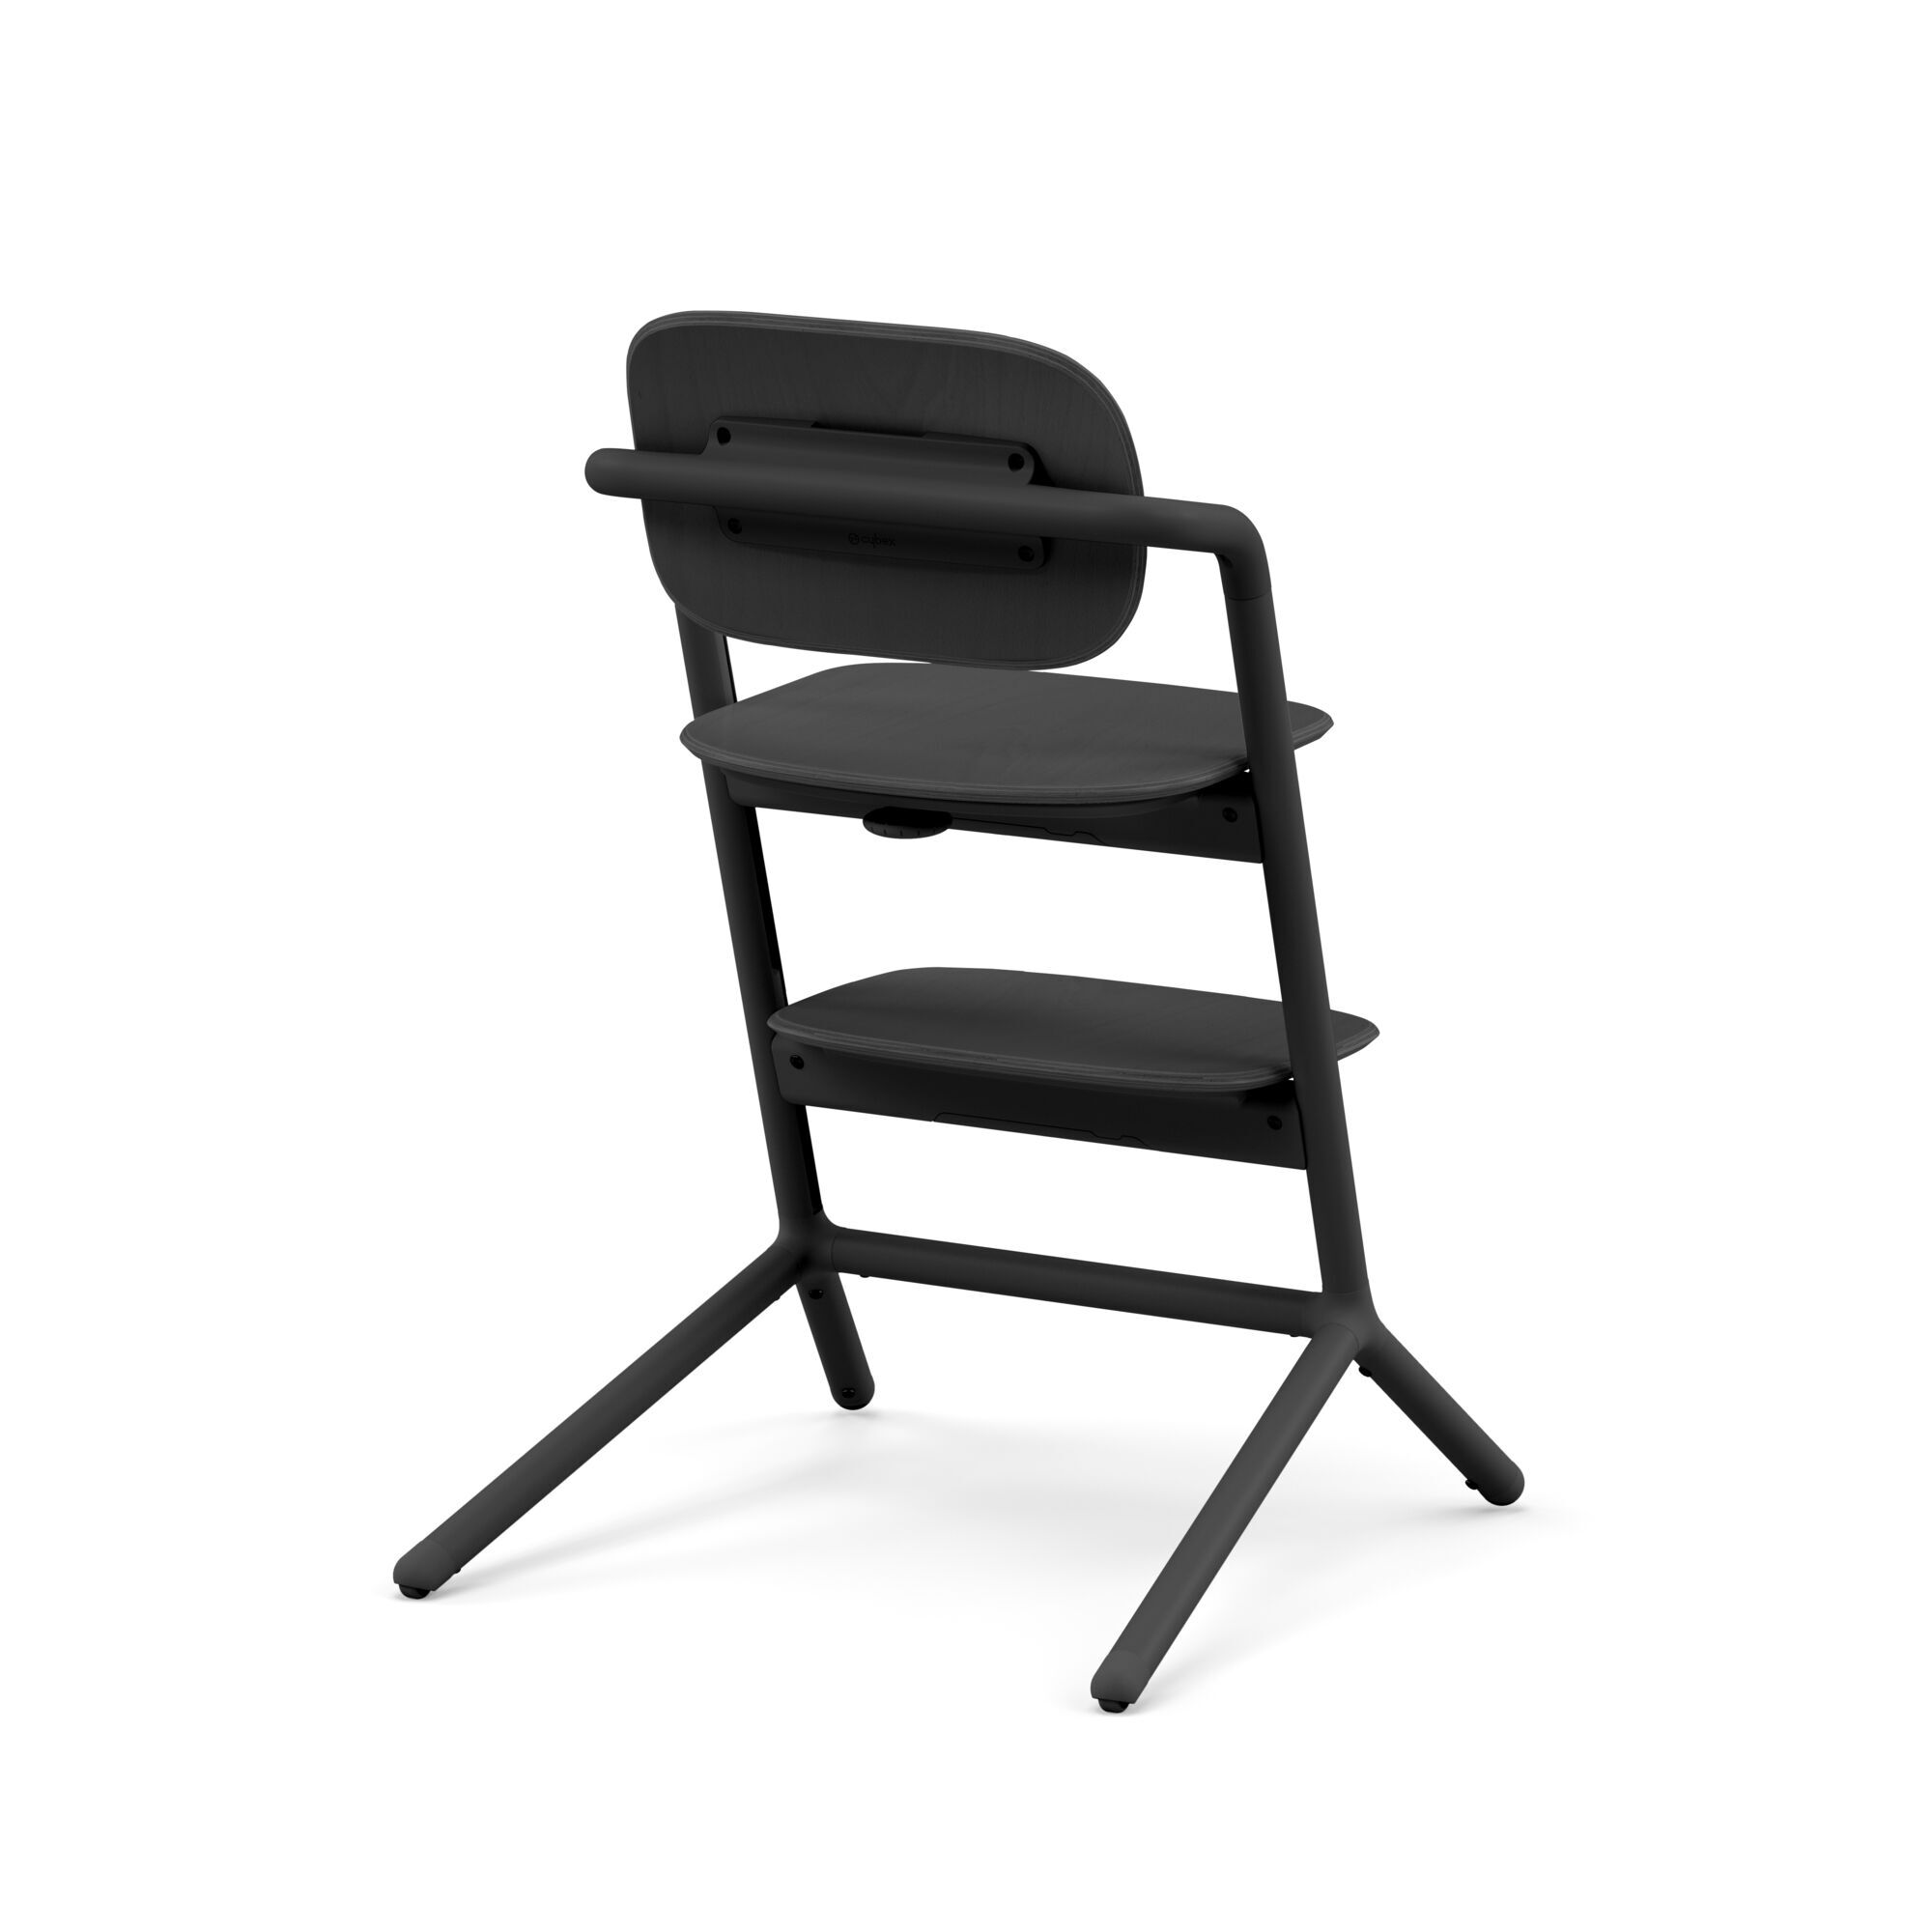 Cybex Lemo 2 High Chair 4-in-1 - ANB Baby -40638462210594 in 1 high chair